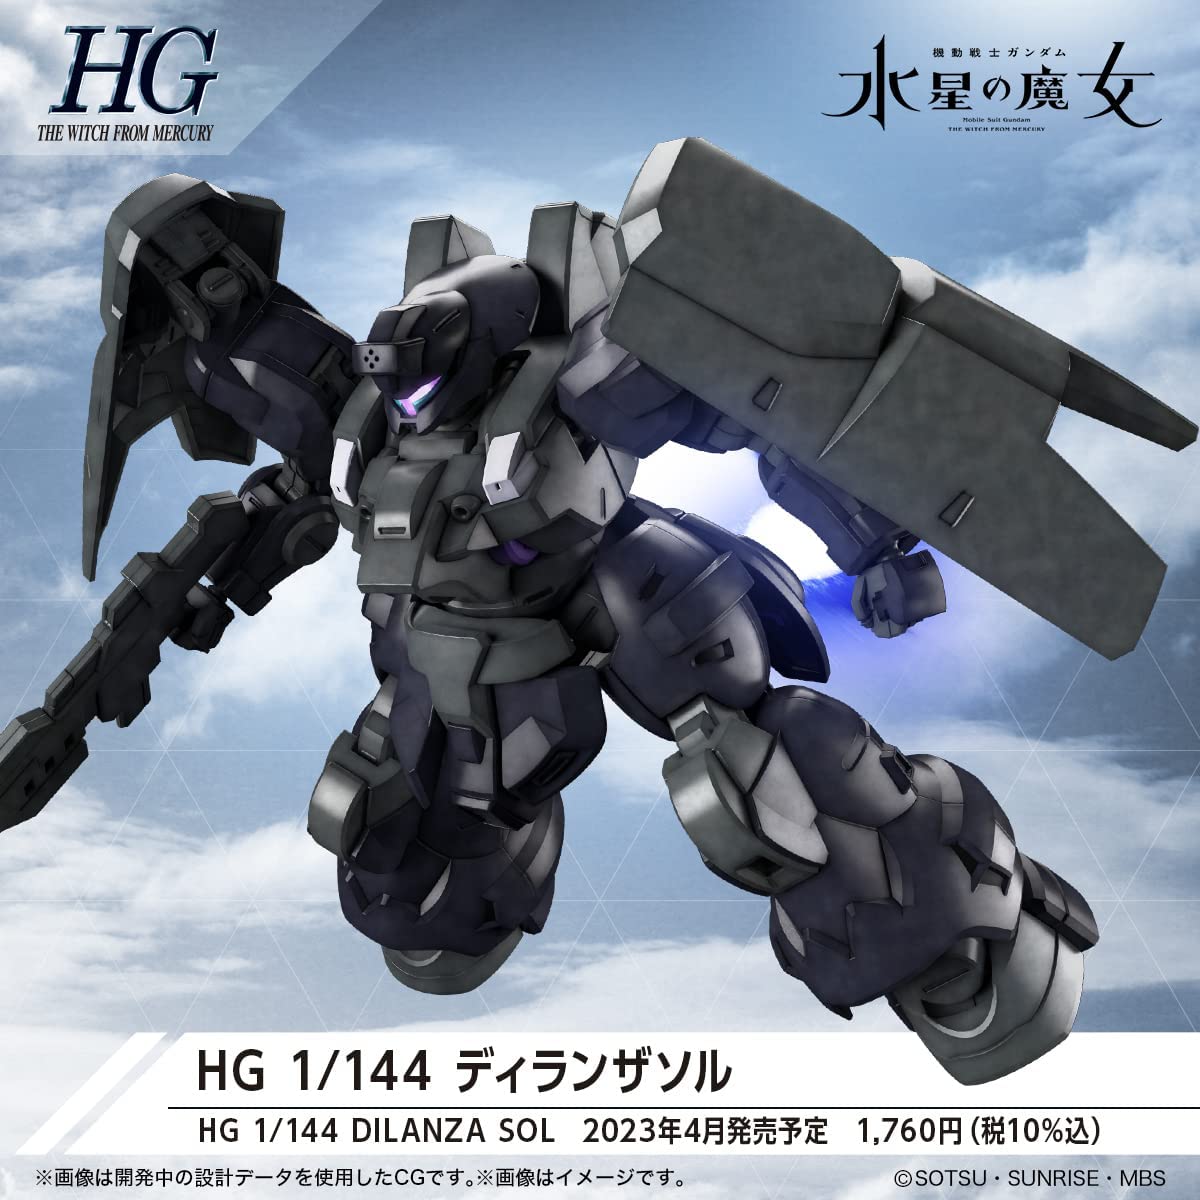 HG Mobile Suit Gundam Mercury Witch Dylanzasol 1/144 Scale Color